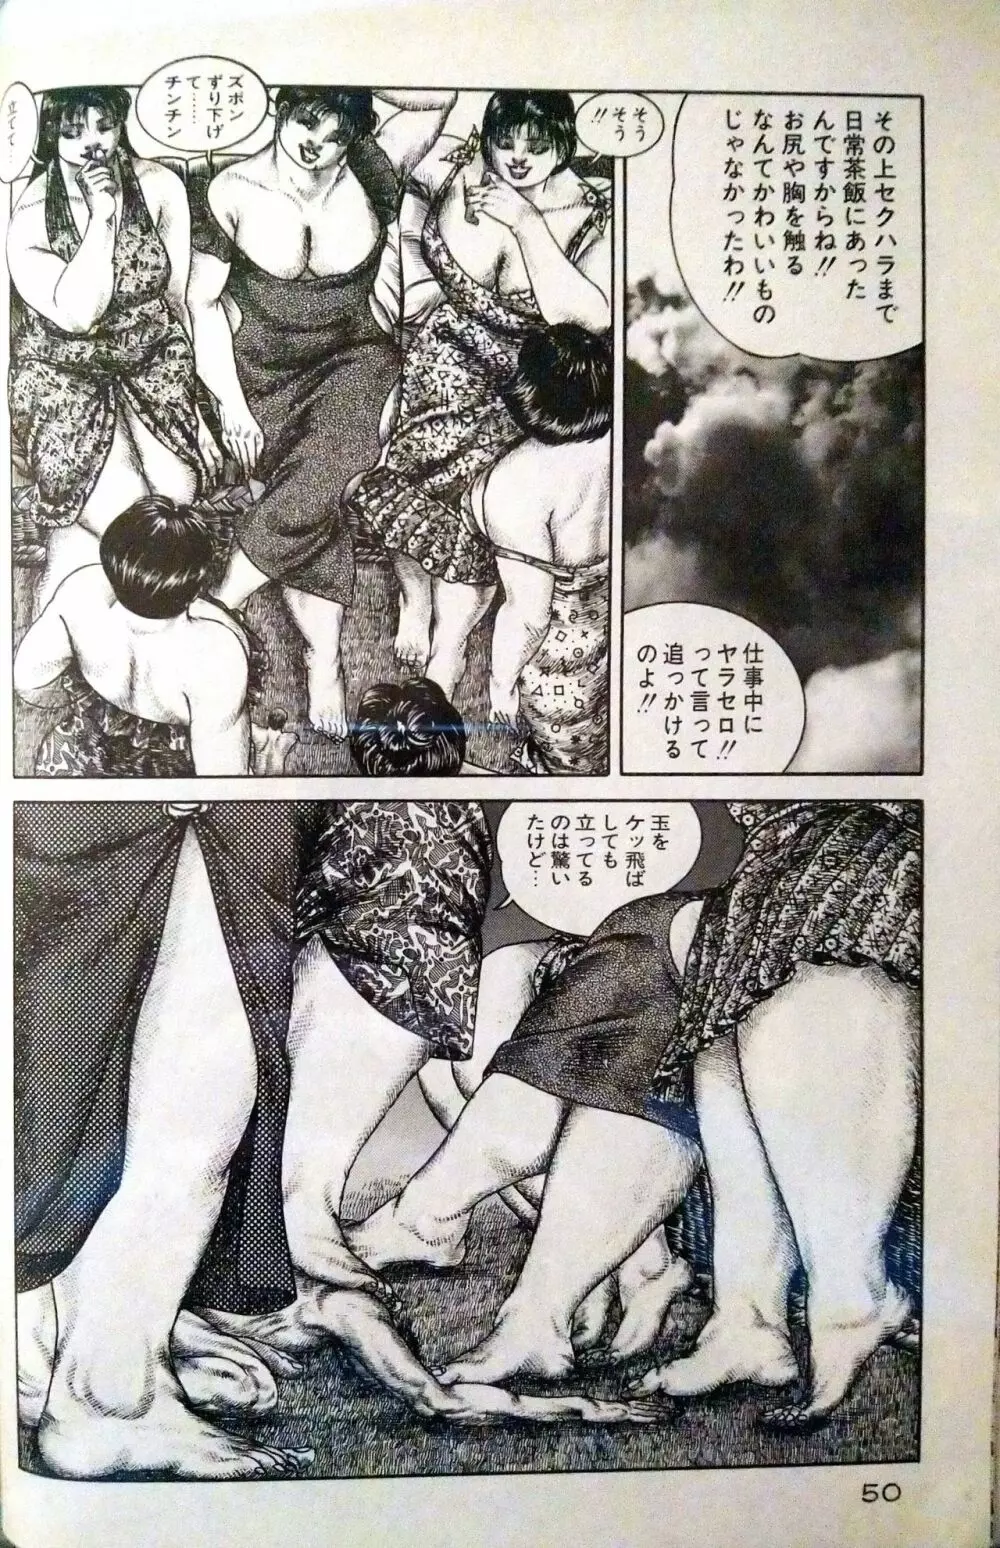 Hiroshi Tatsumi Book 2 – Chapitre 1 – “Group Of Merciless” 42ページ